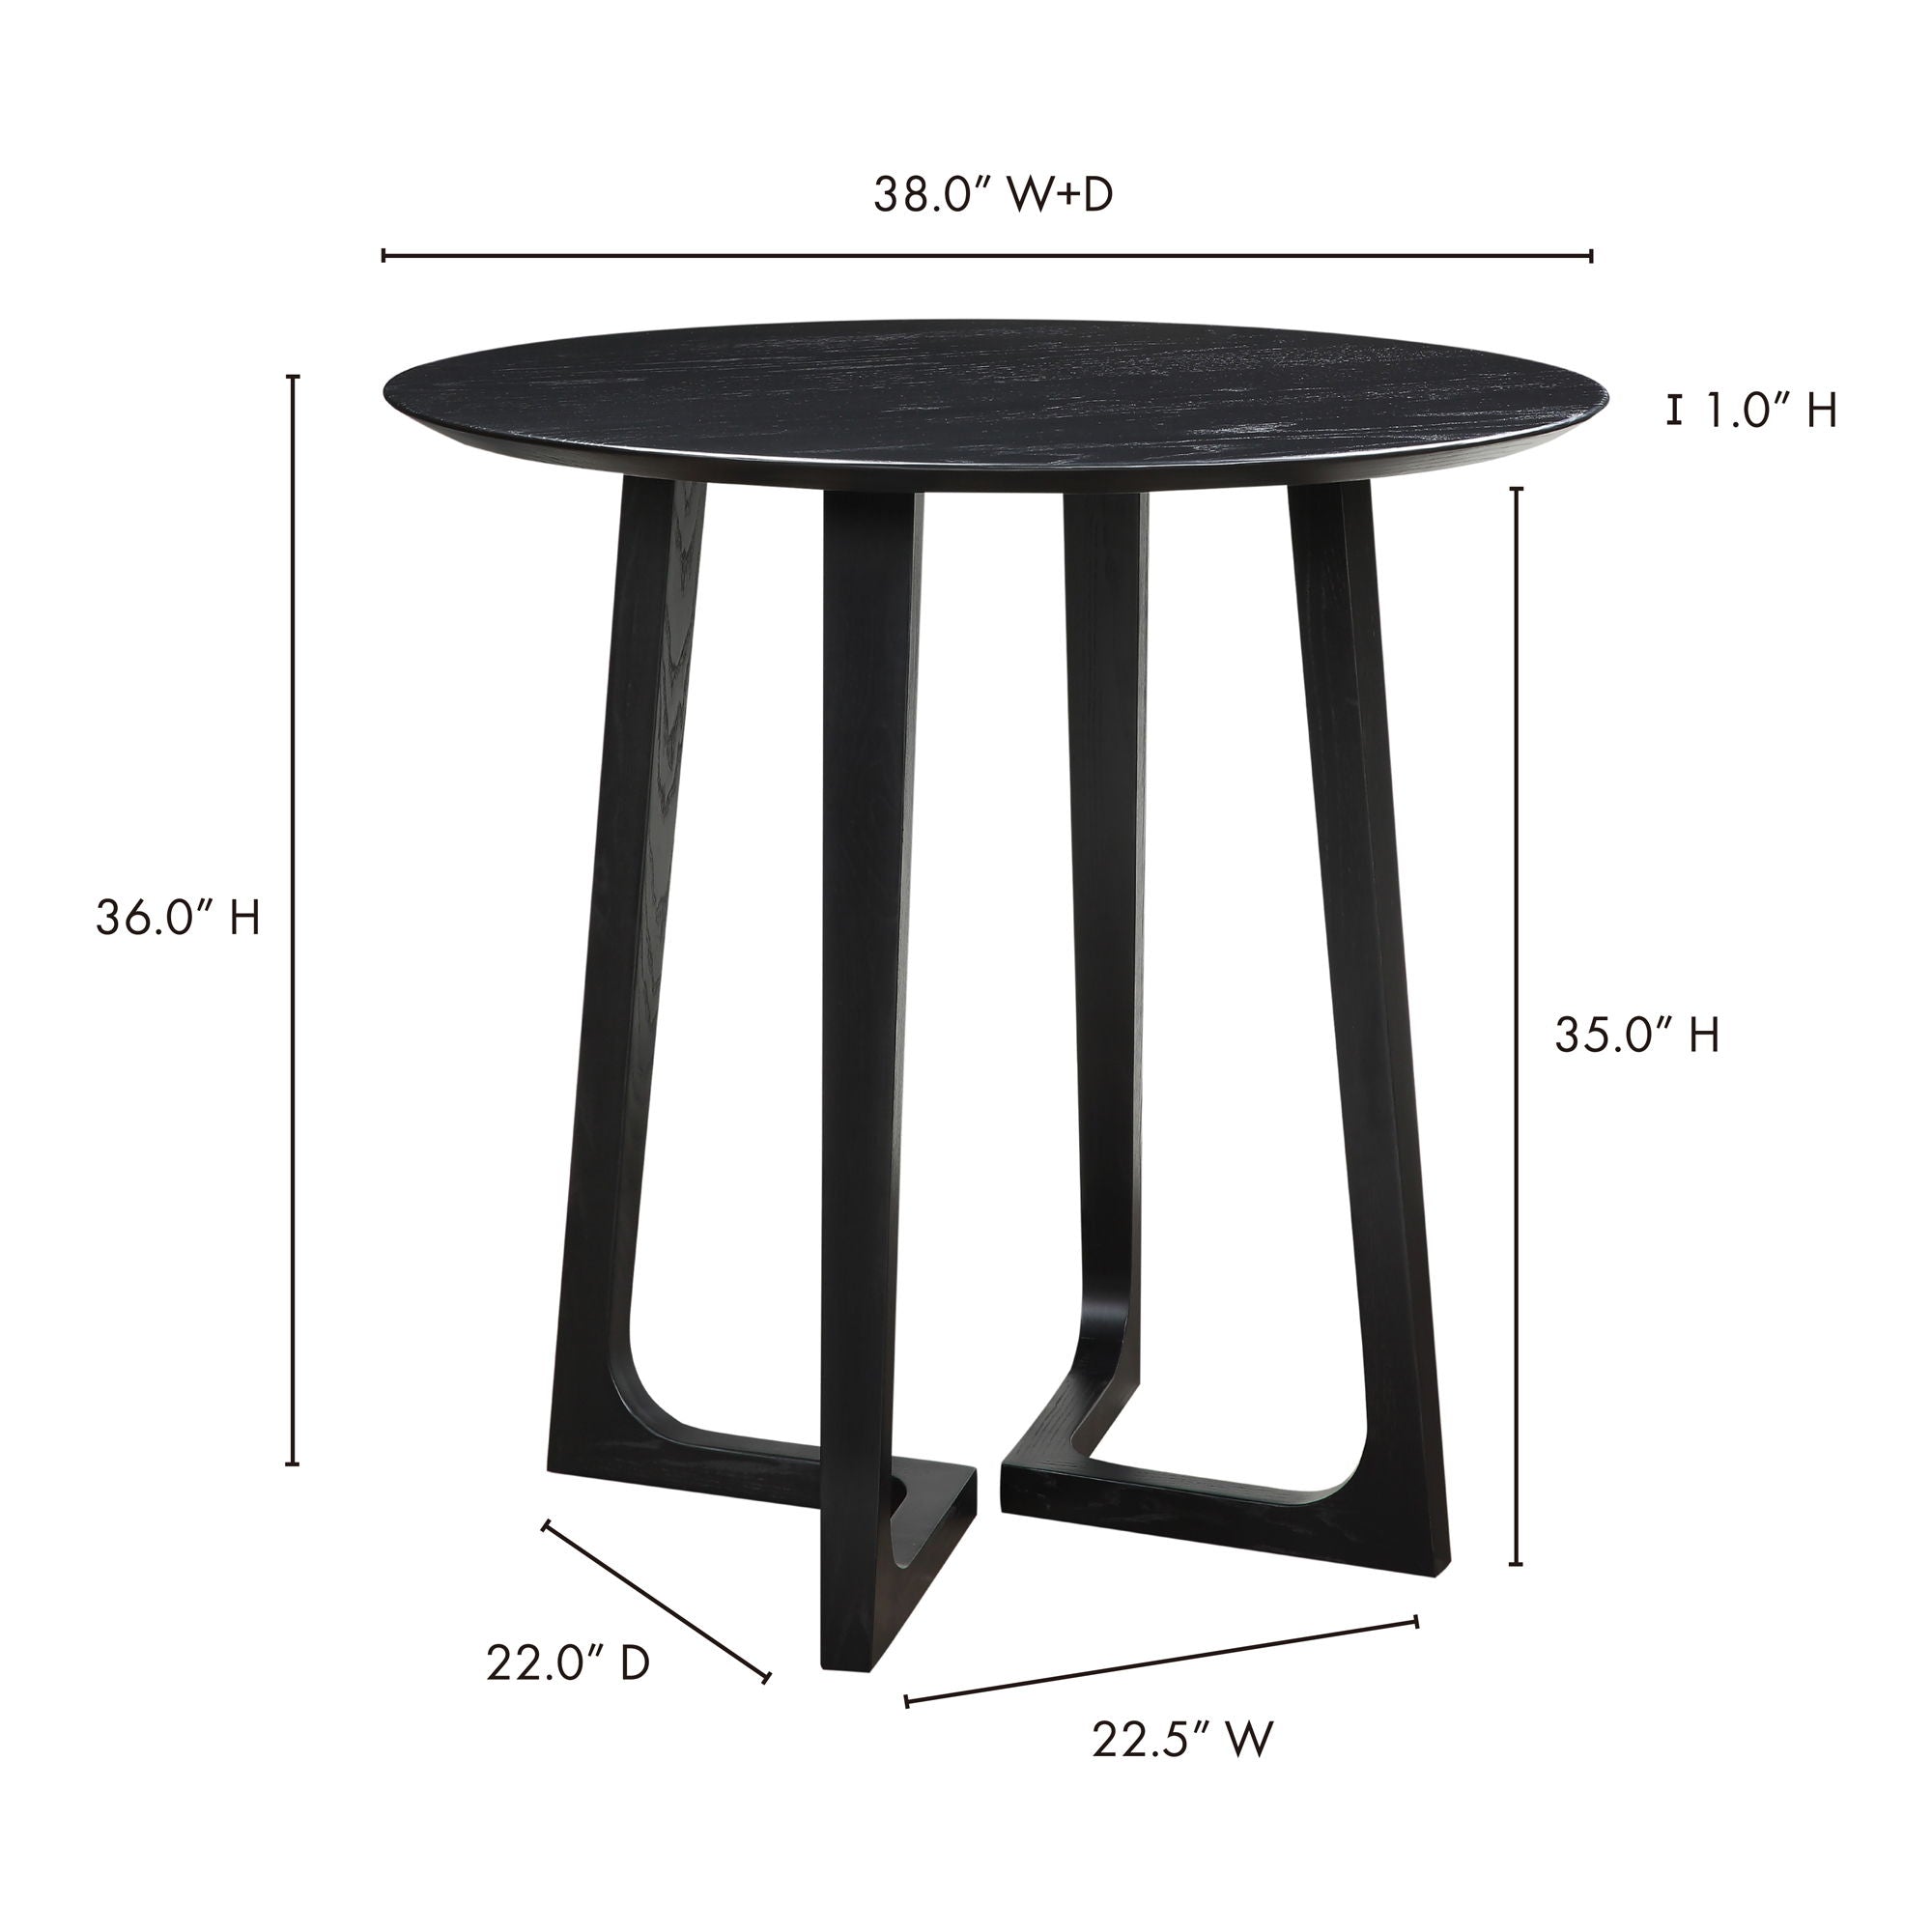 Godenza - Counter Table - Black